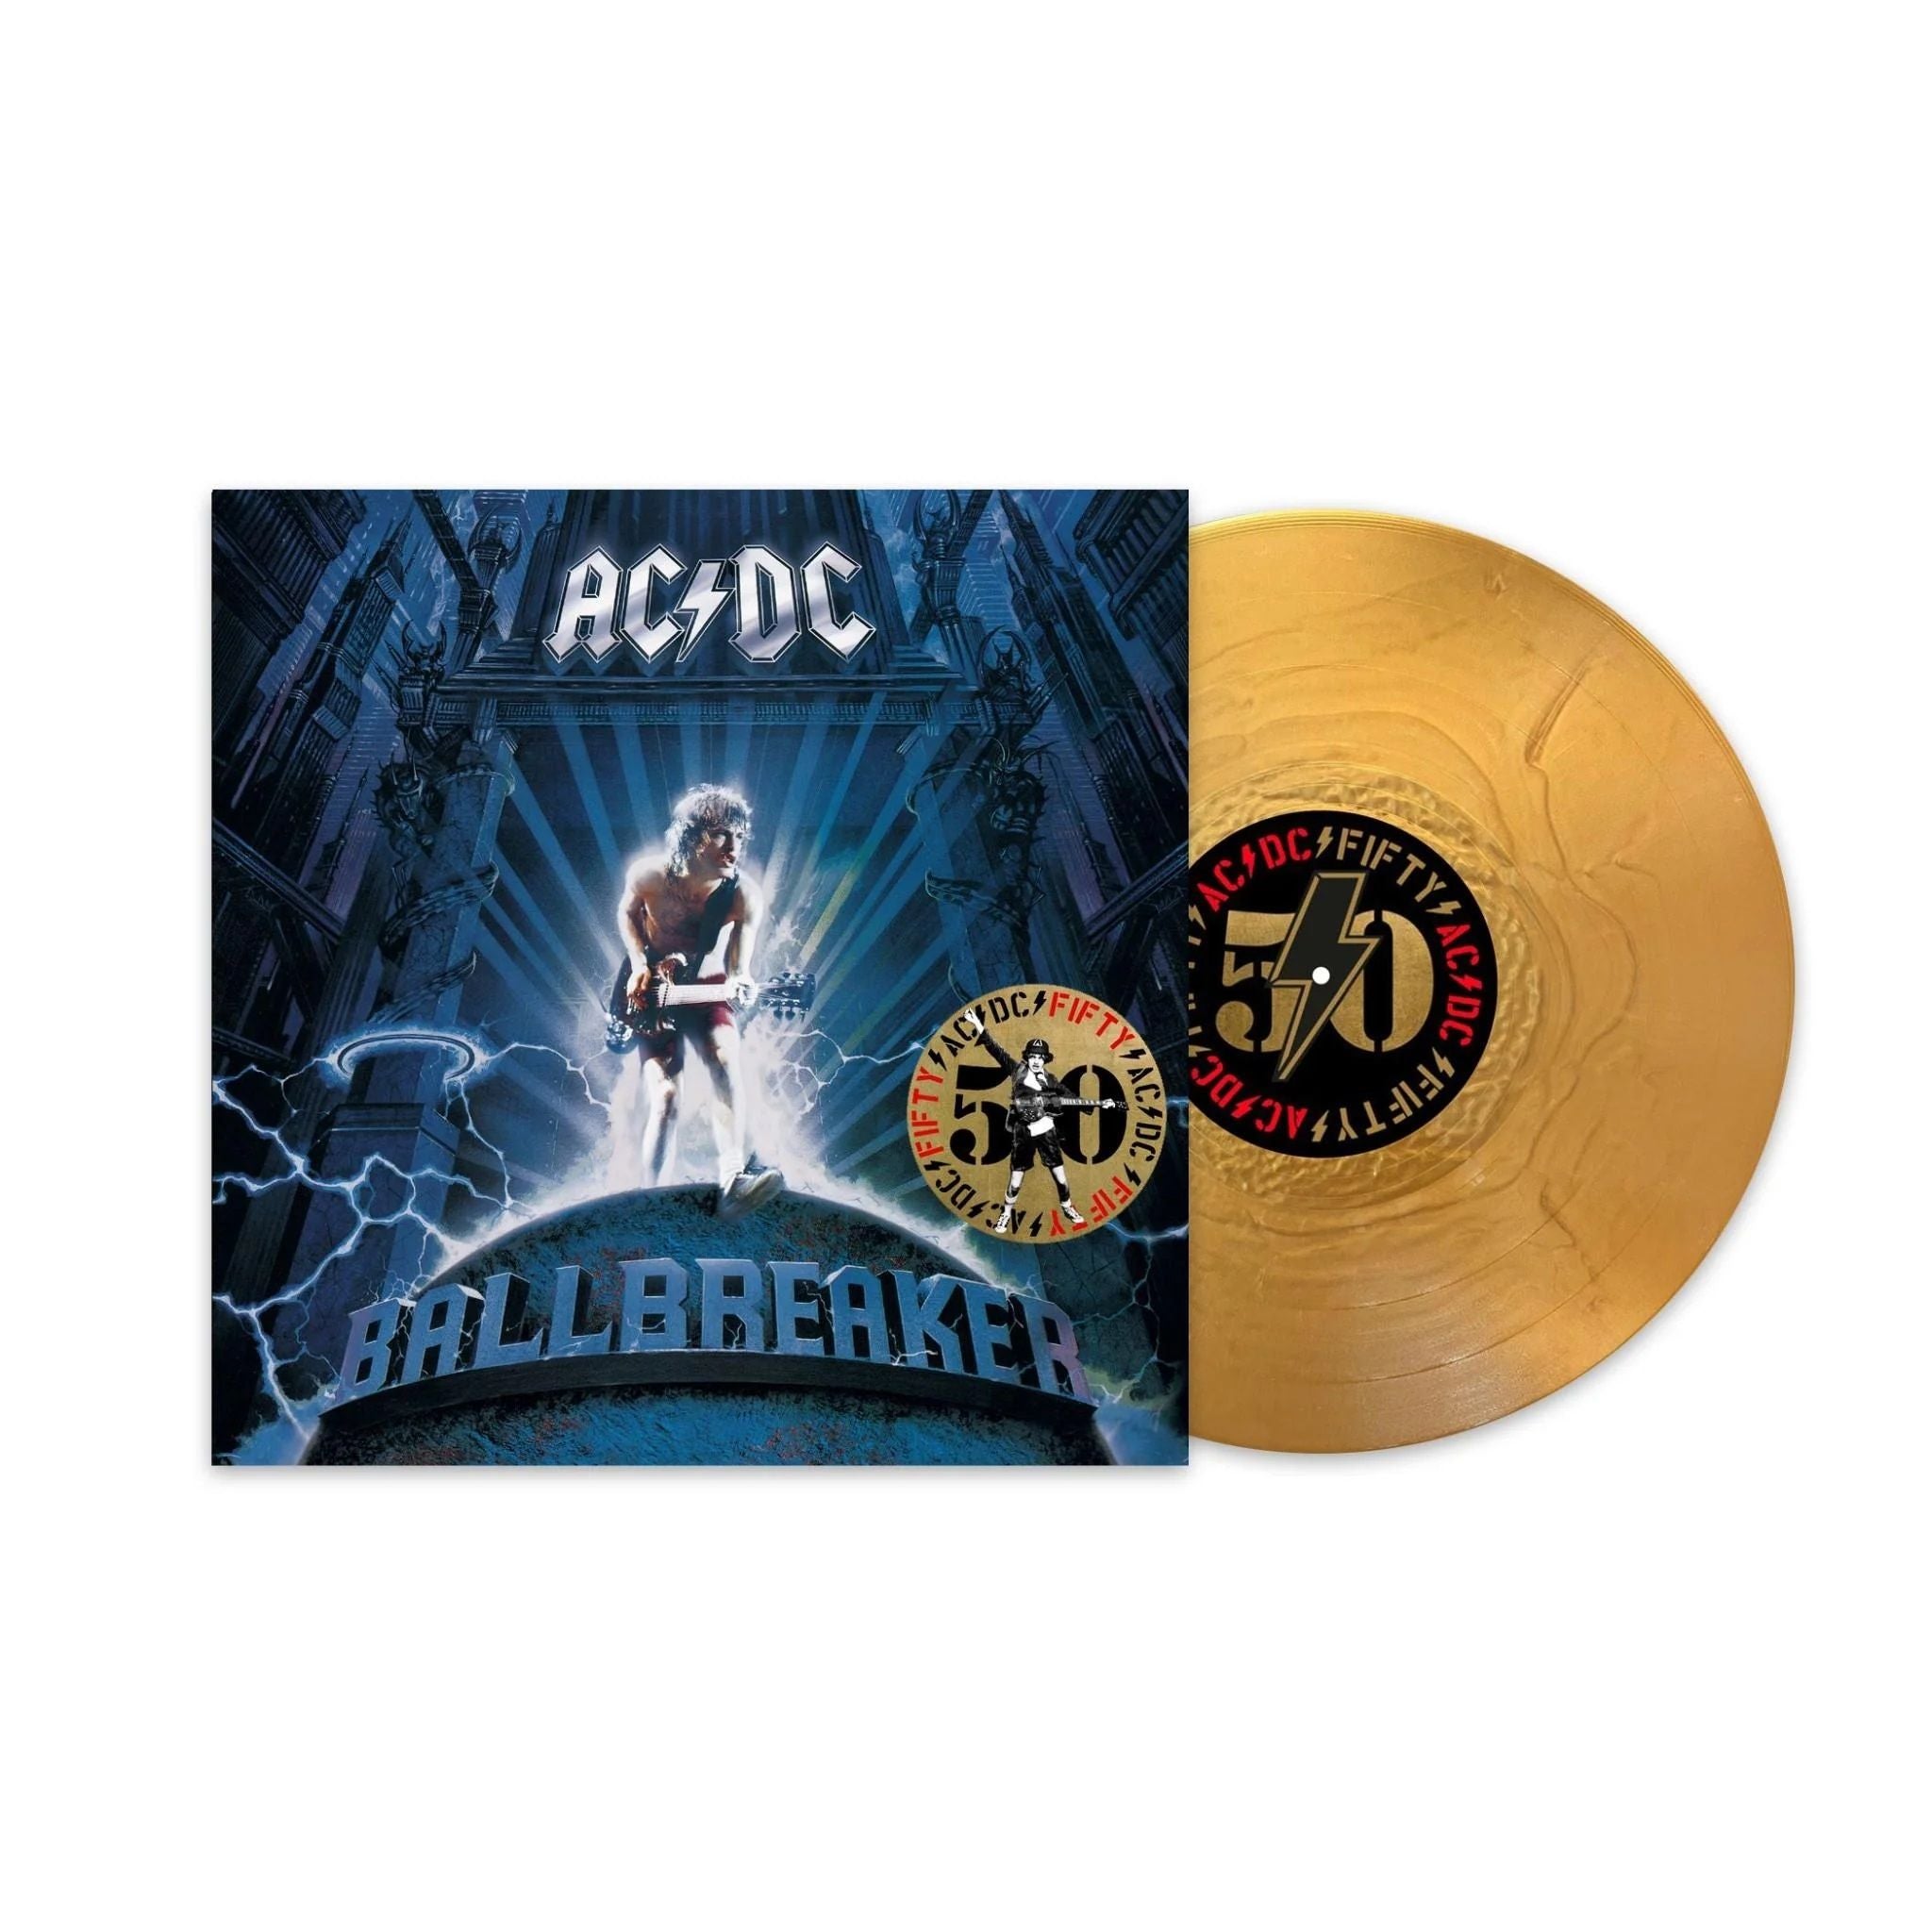 ACDC - Ballbreaker (50th Anniversary Special Ed. Gold vinyl reissue with insert) - Vinyl - New - PRE-ORDER